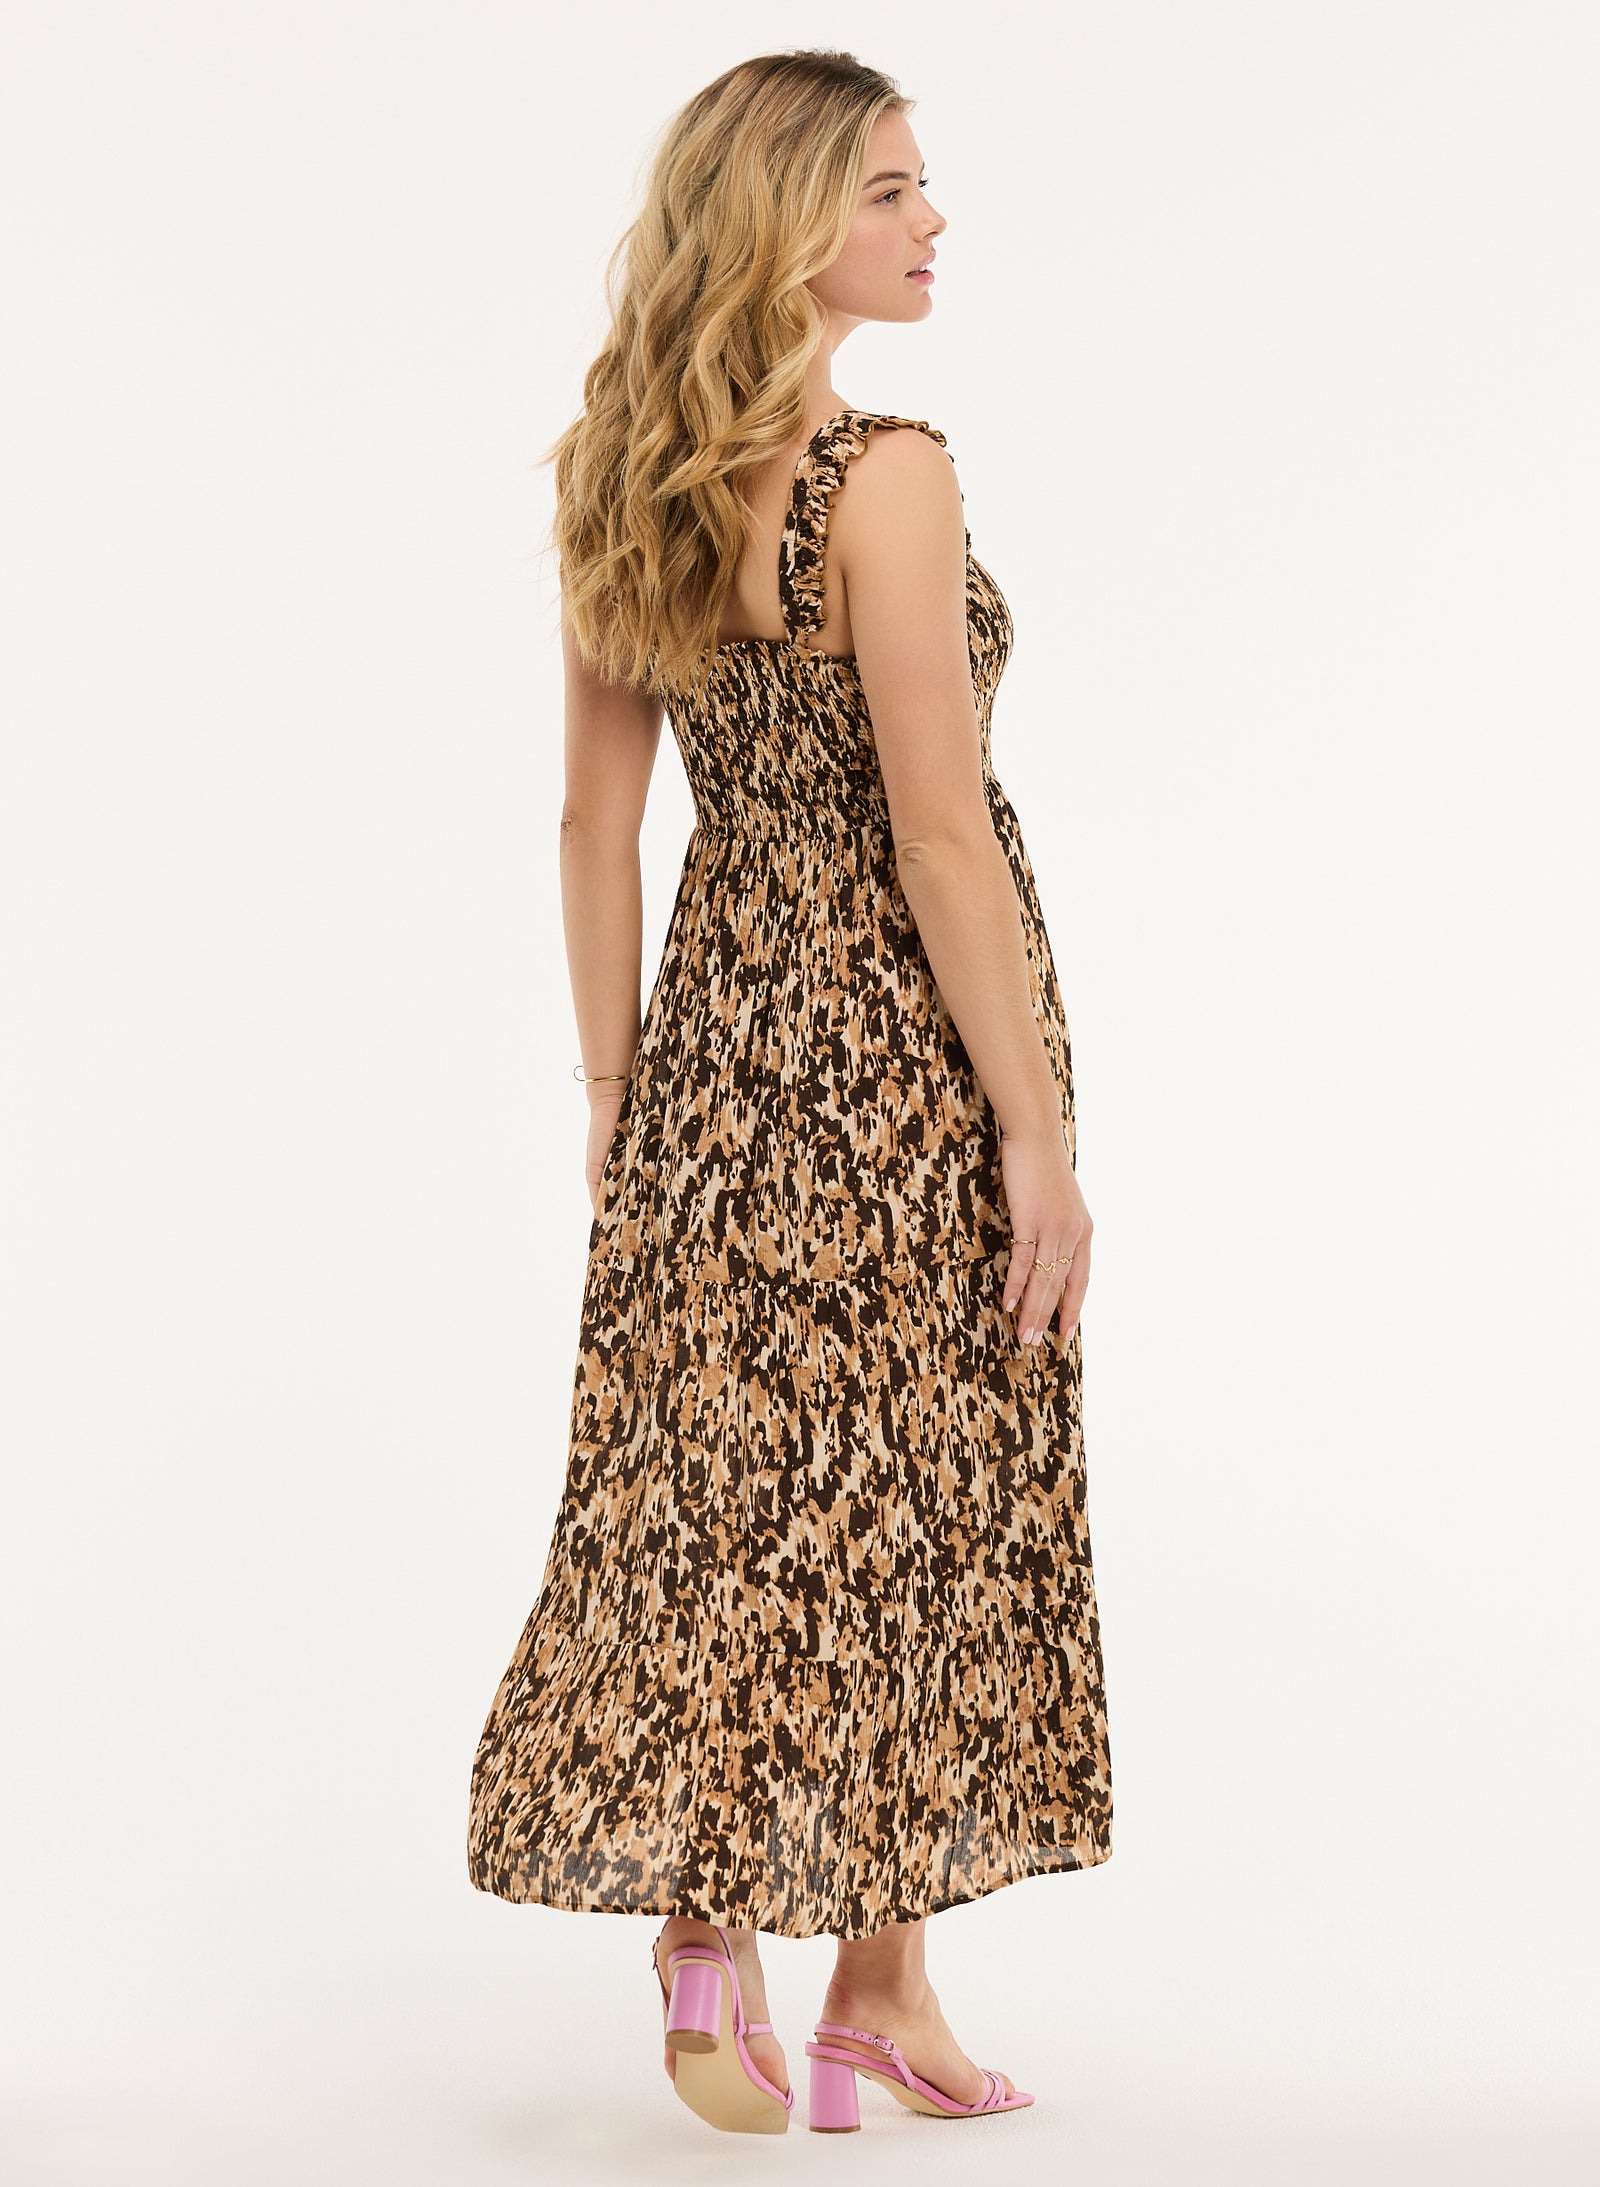 Ladies SEYCHELLES dress faded leopard